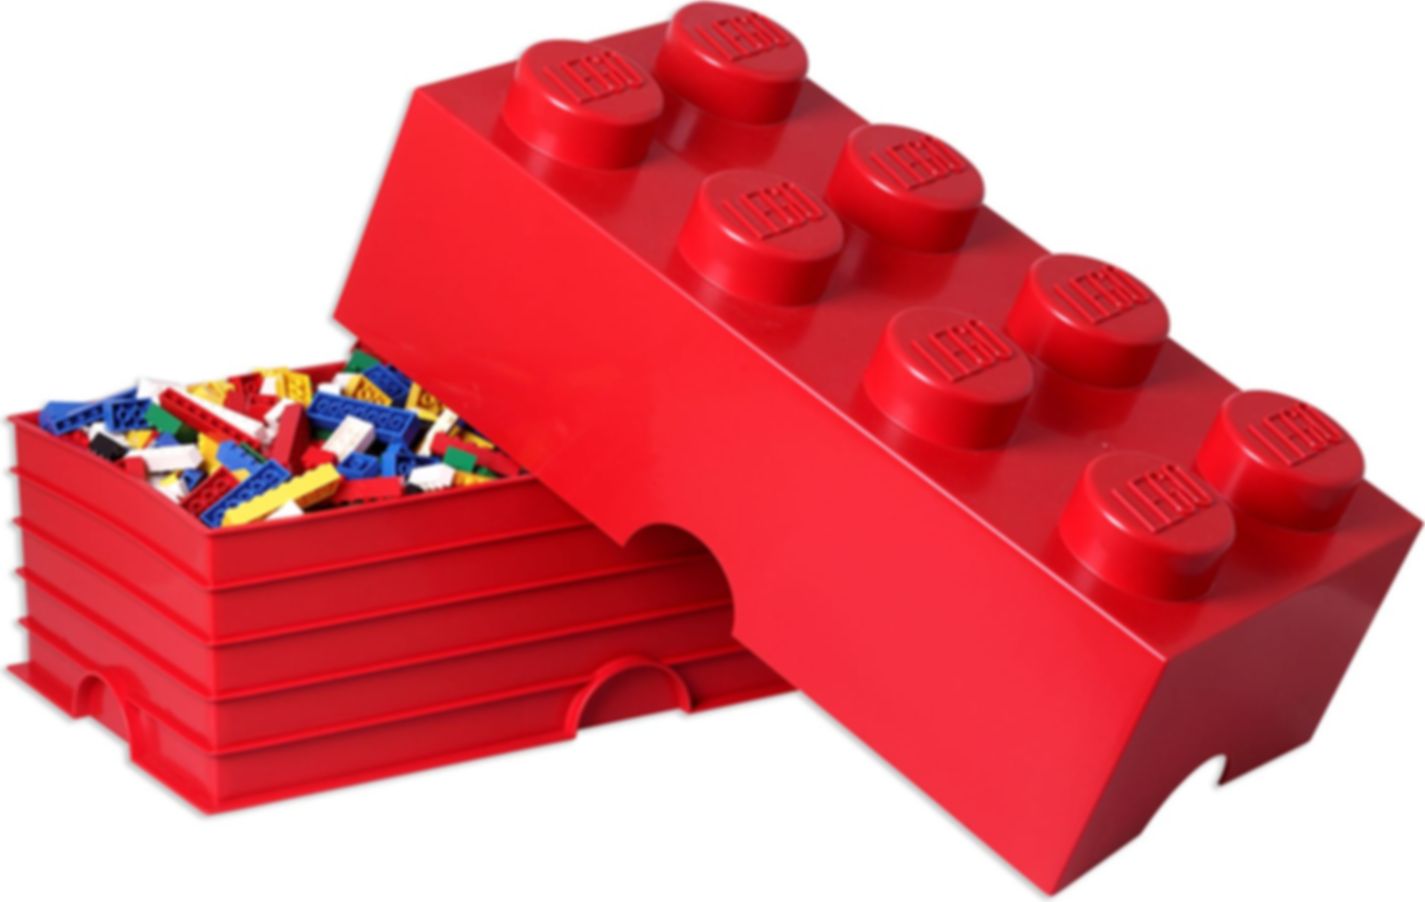 8-Stud Storage Brick – Red components